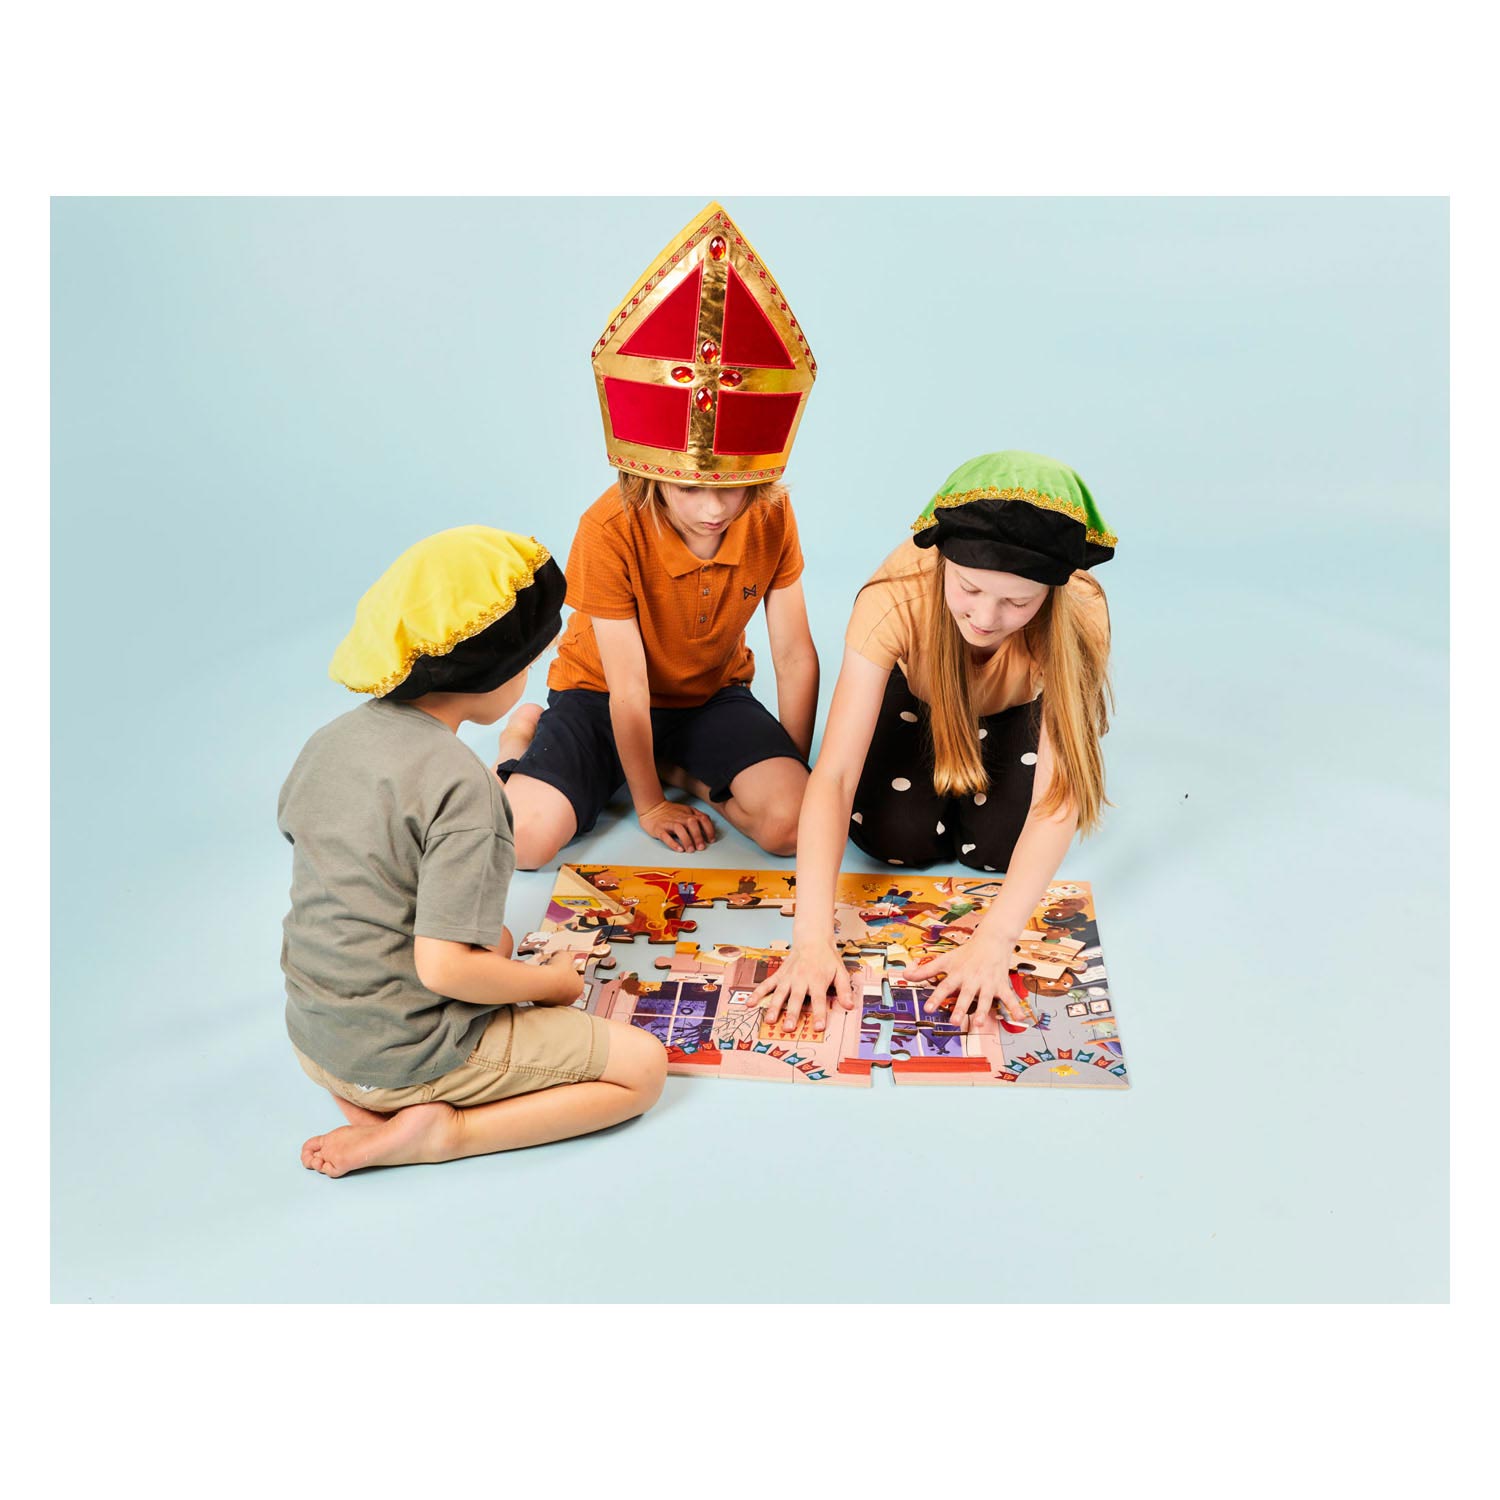 Rolf - Puzzle de parquet Sinterklaas, 40 pcs.